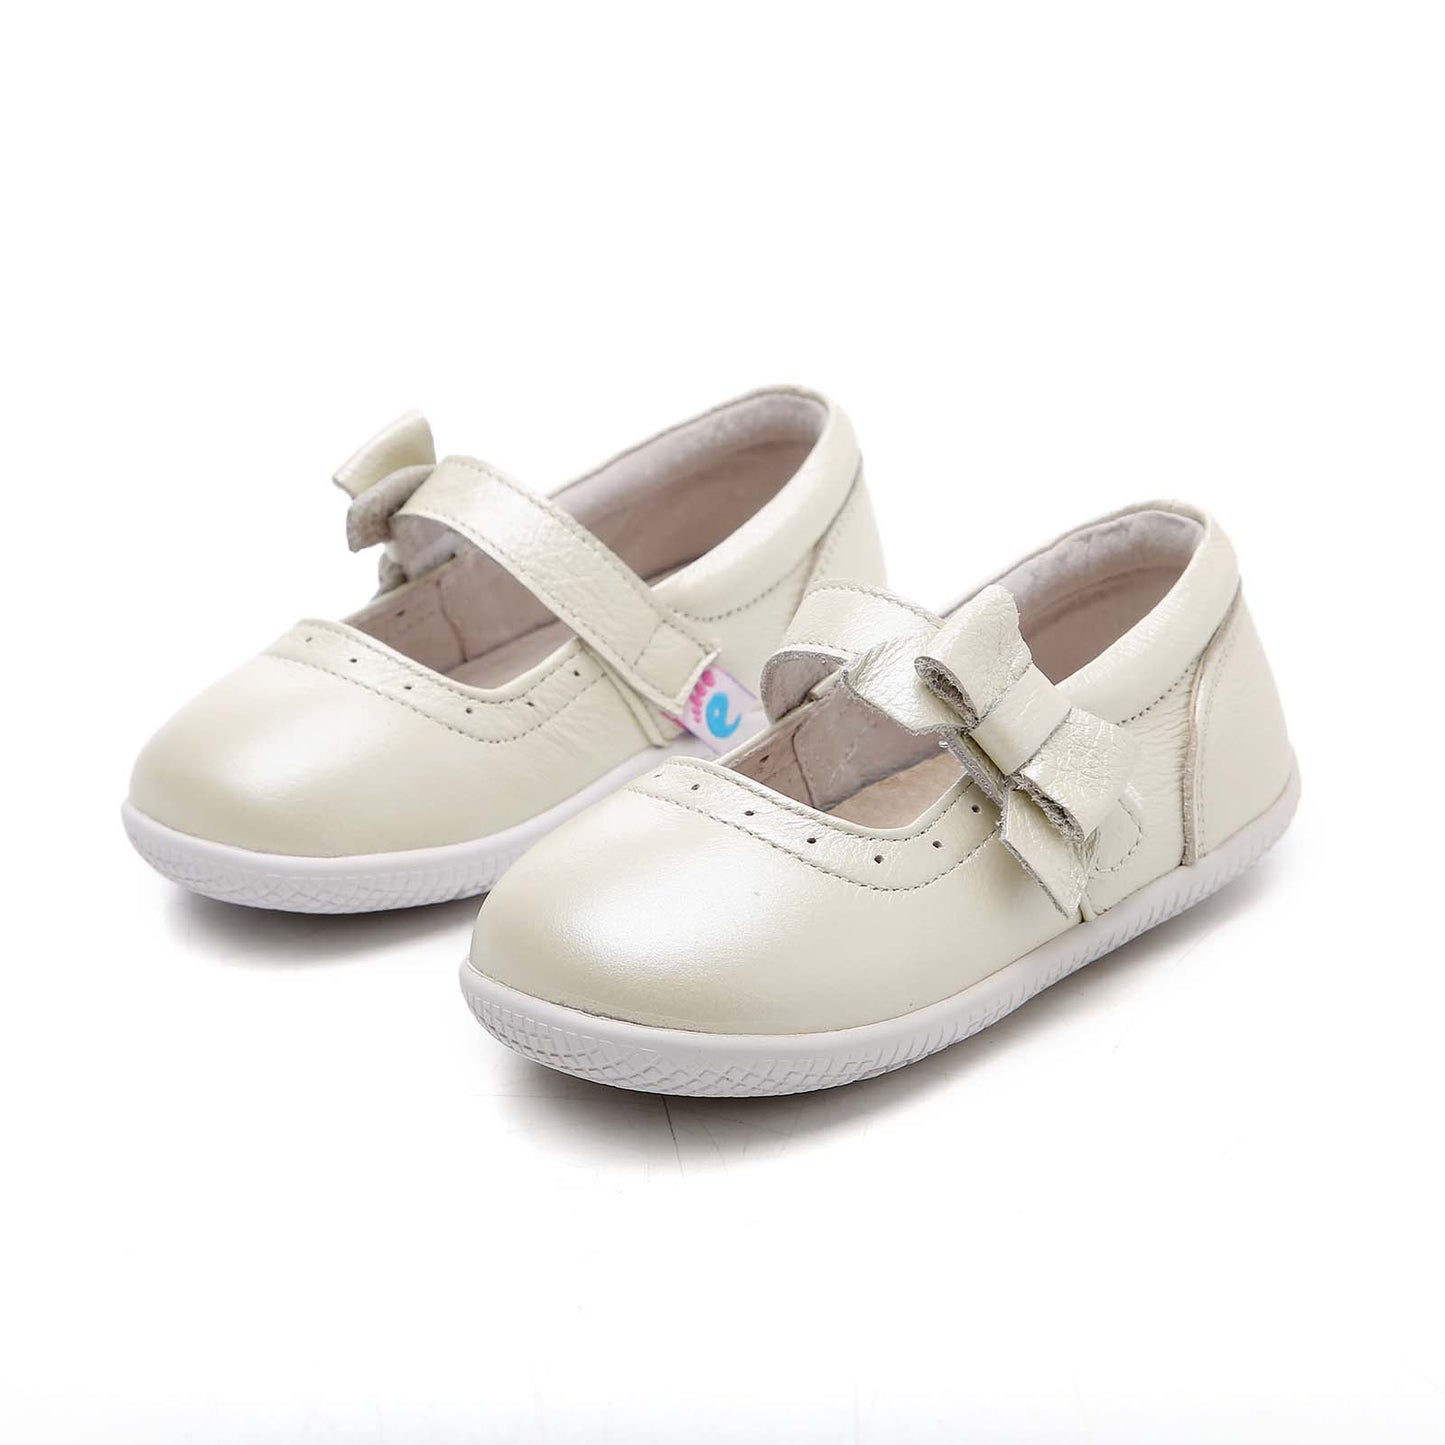 Freycoo - Cream Janelle Flexi-Sole Toddler Shoes